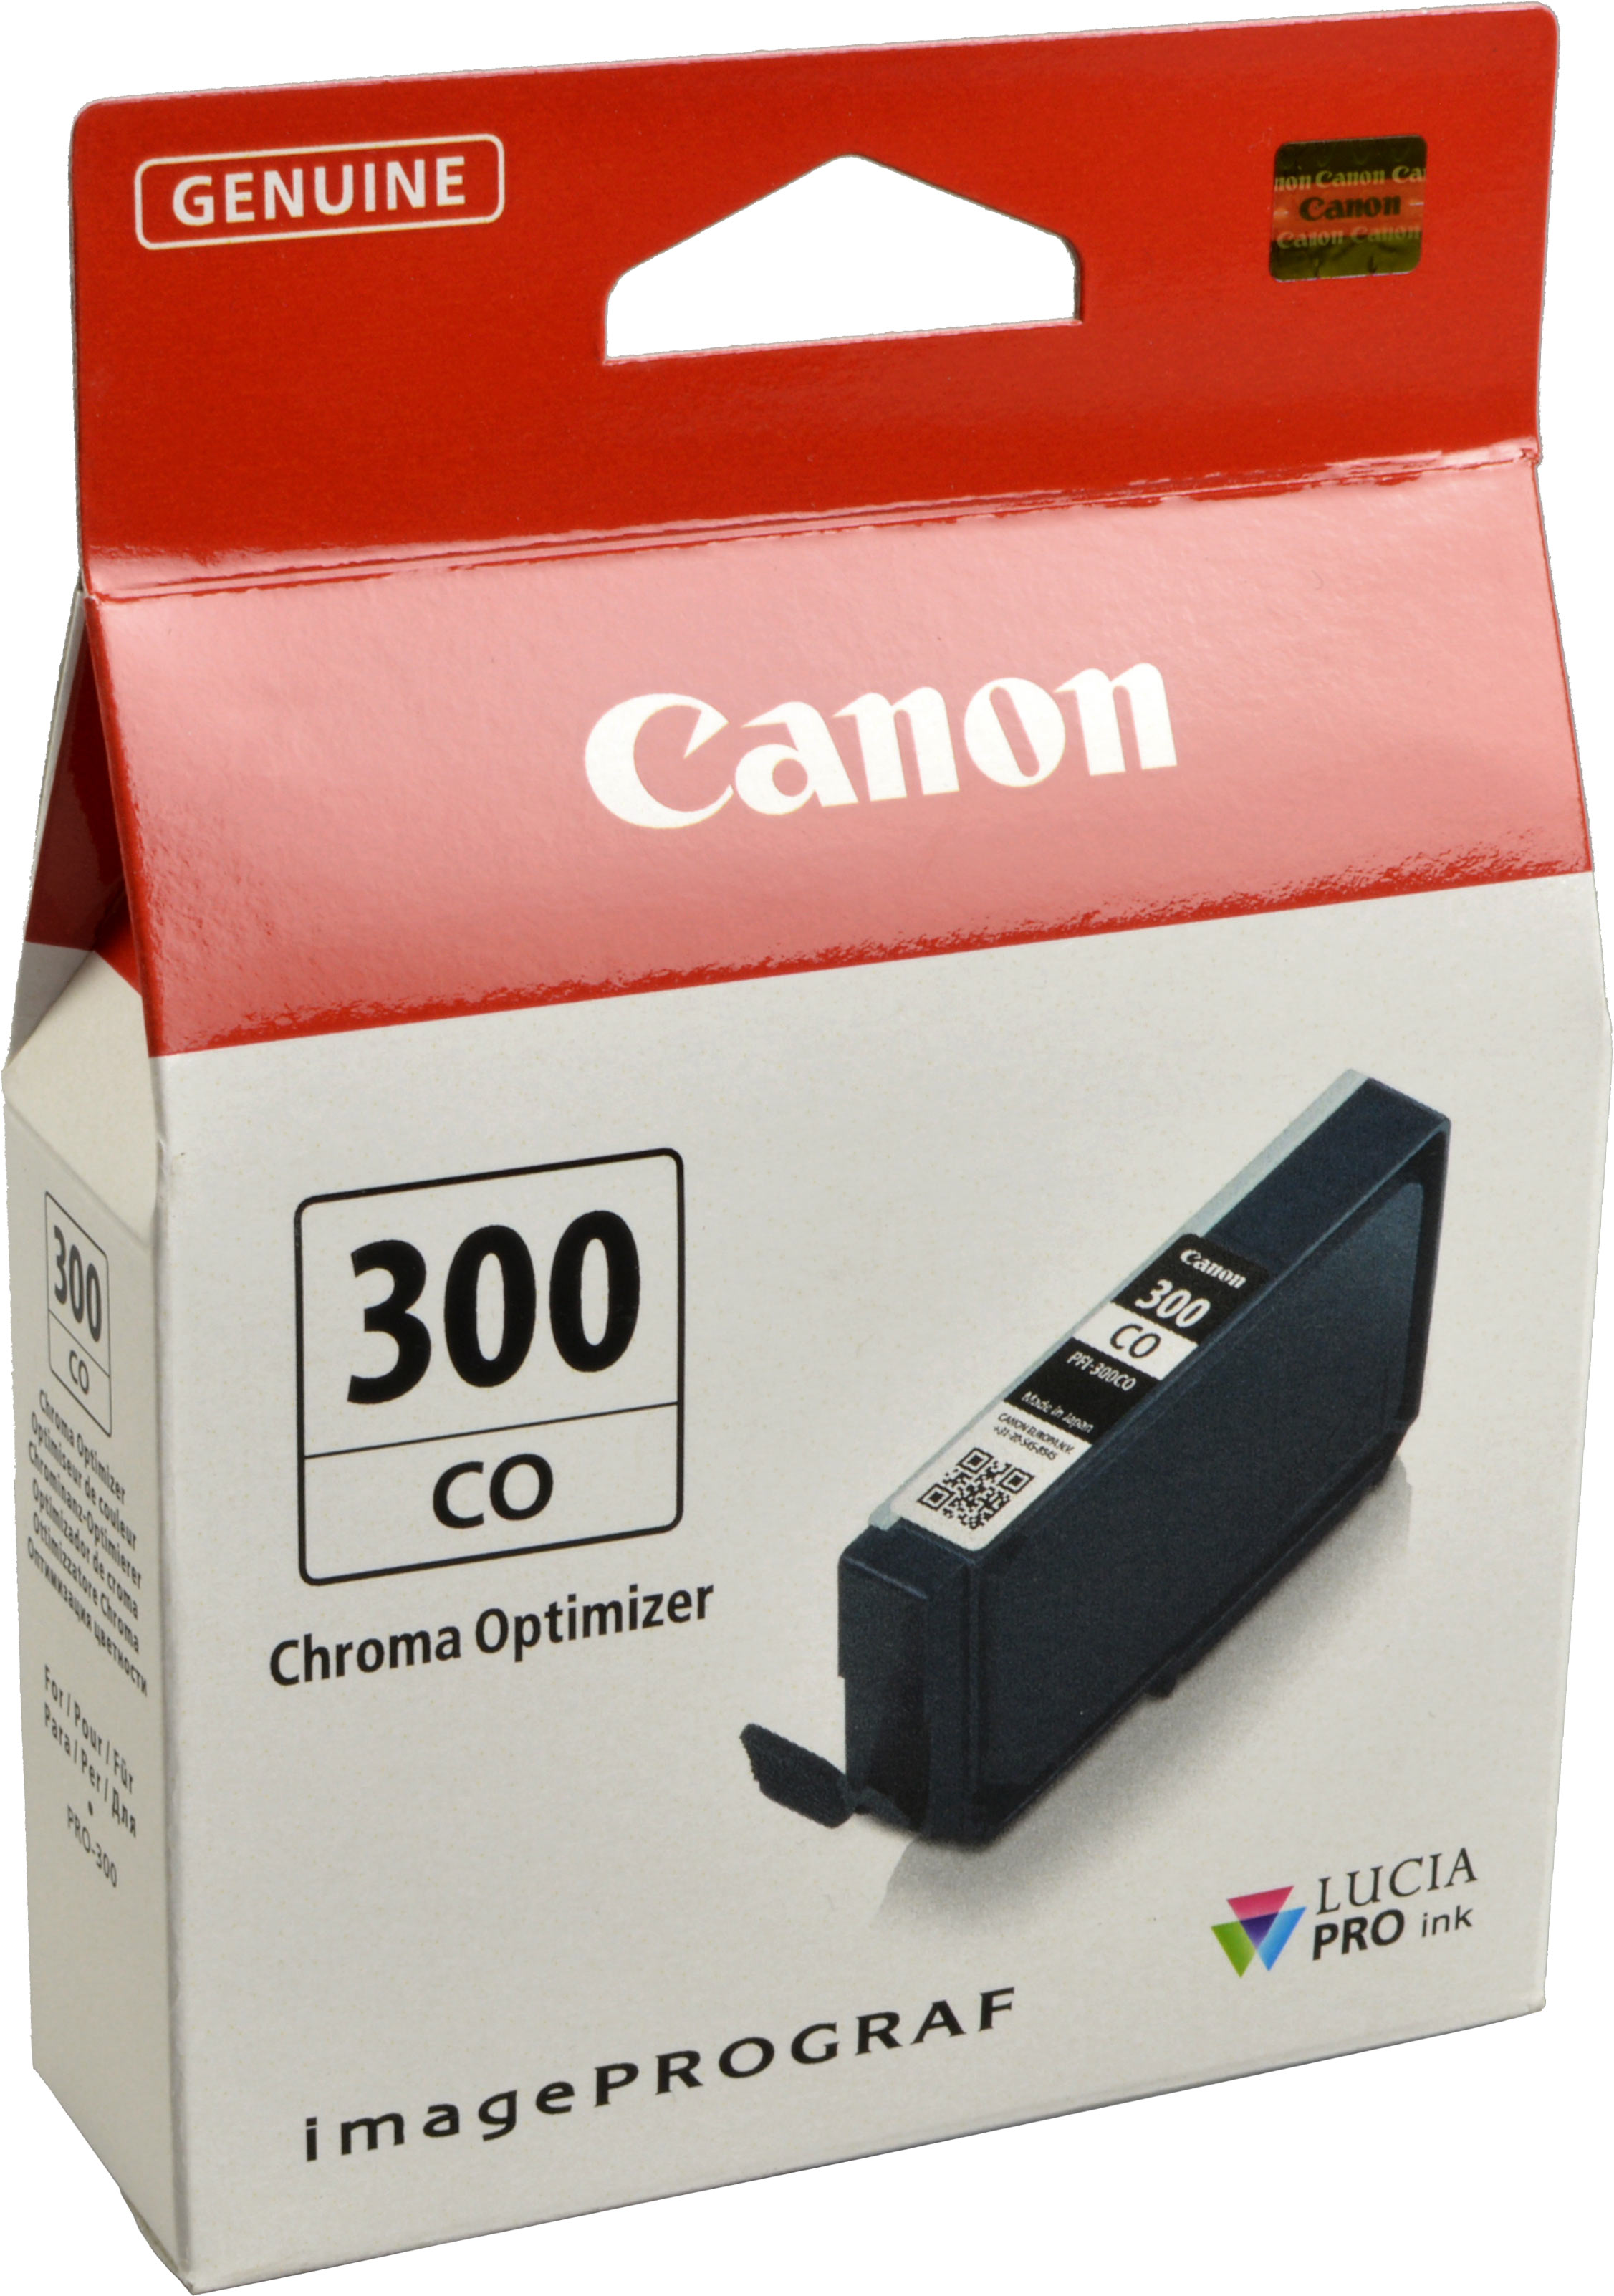 Canon Tinte 4201C001  PFI-300CO  chroma optimizer